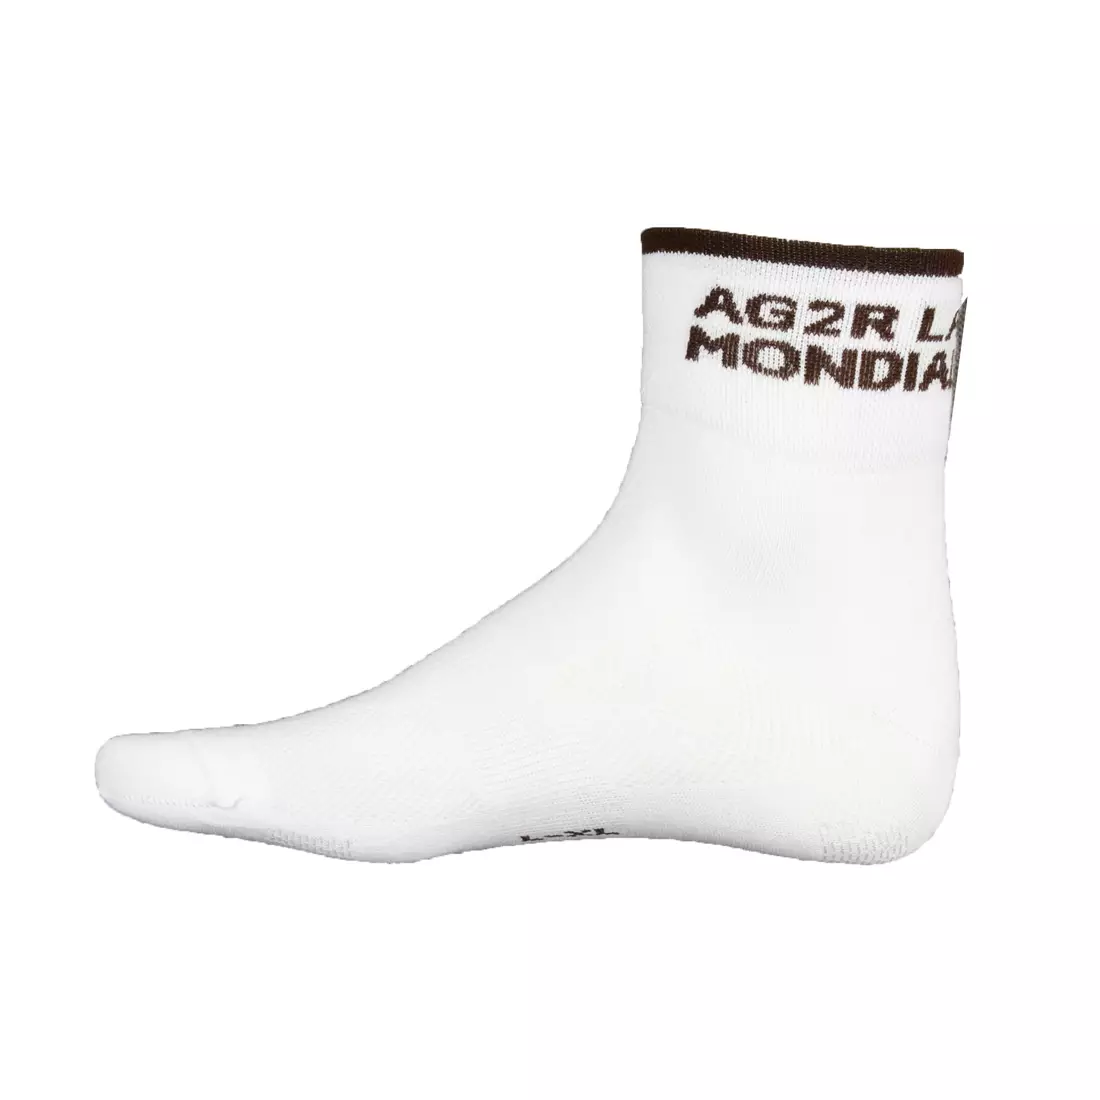 AG2R 2015 cycling socks